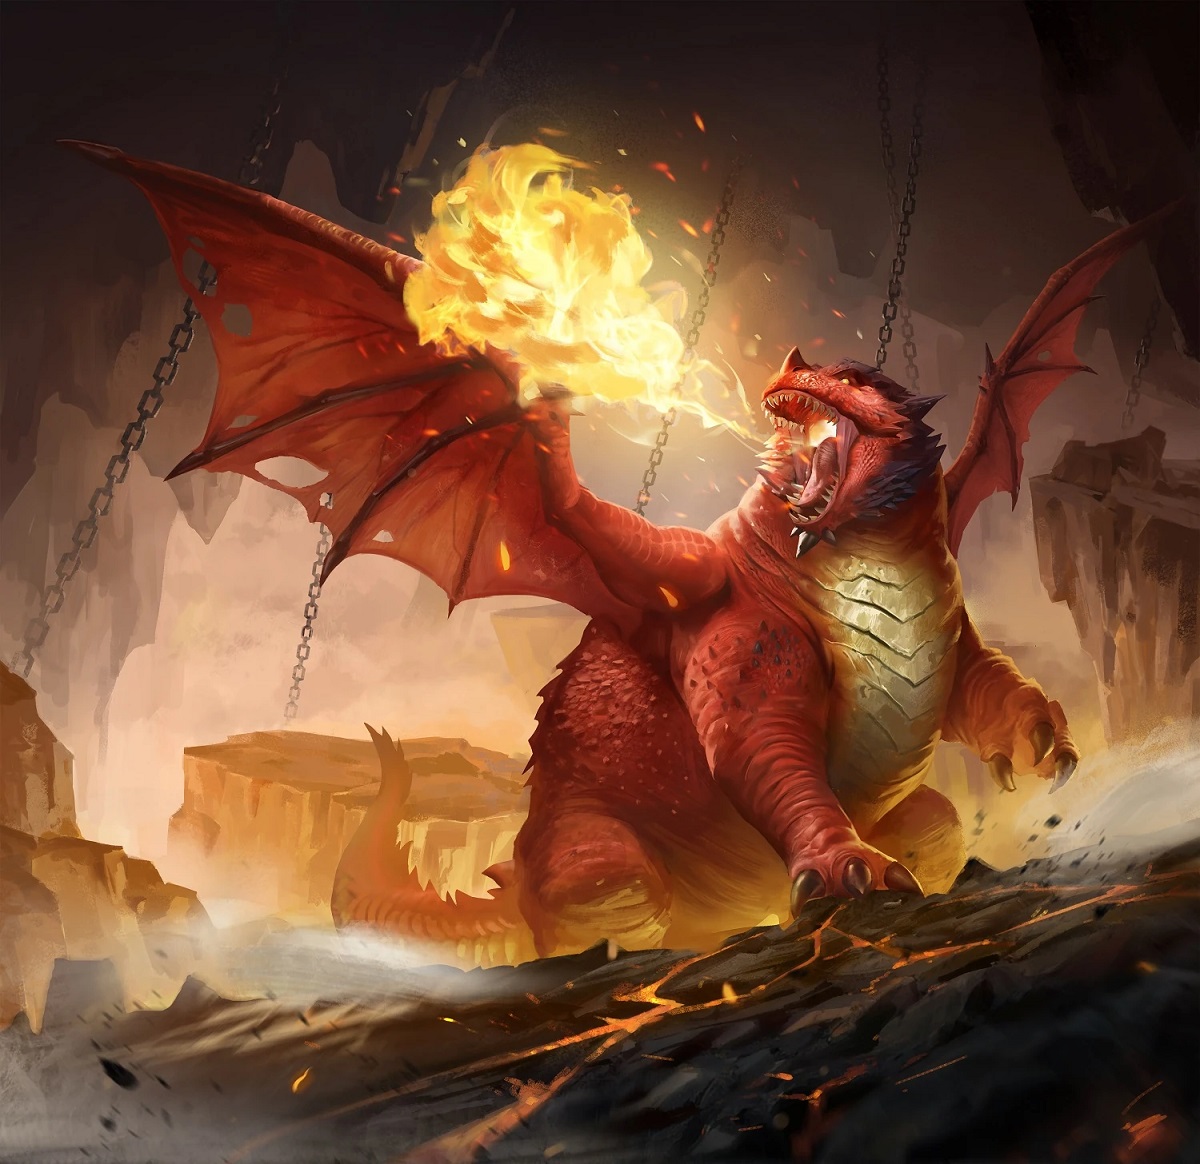 basilisk dragon di dragon city